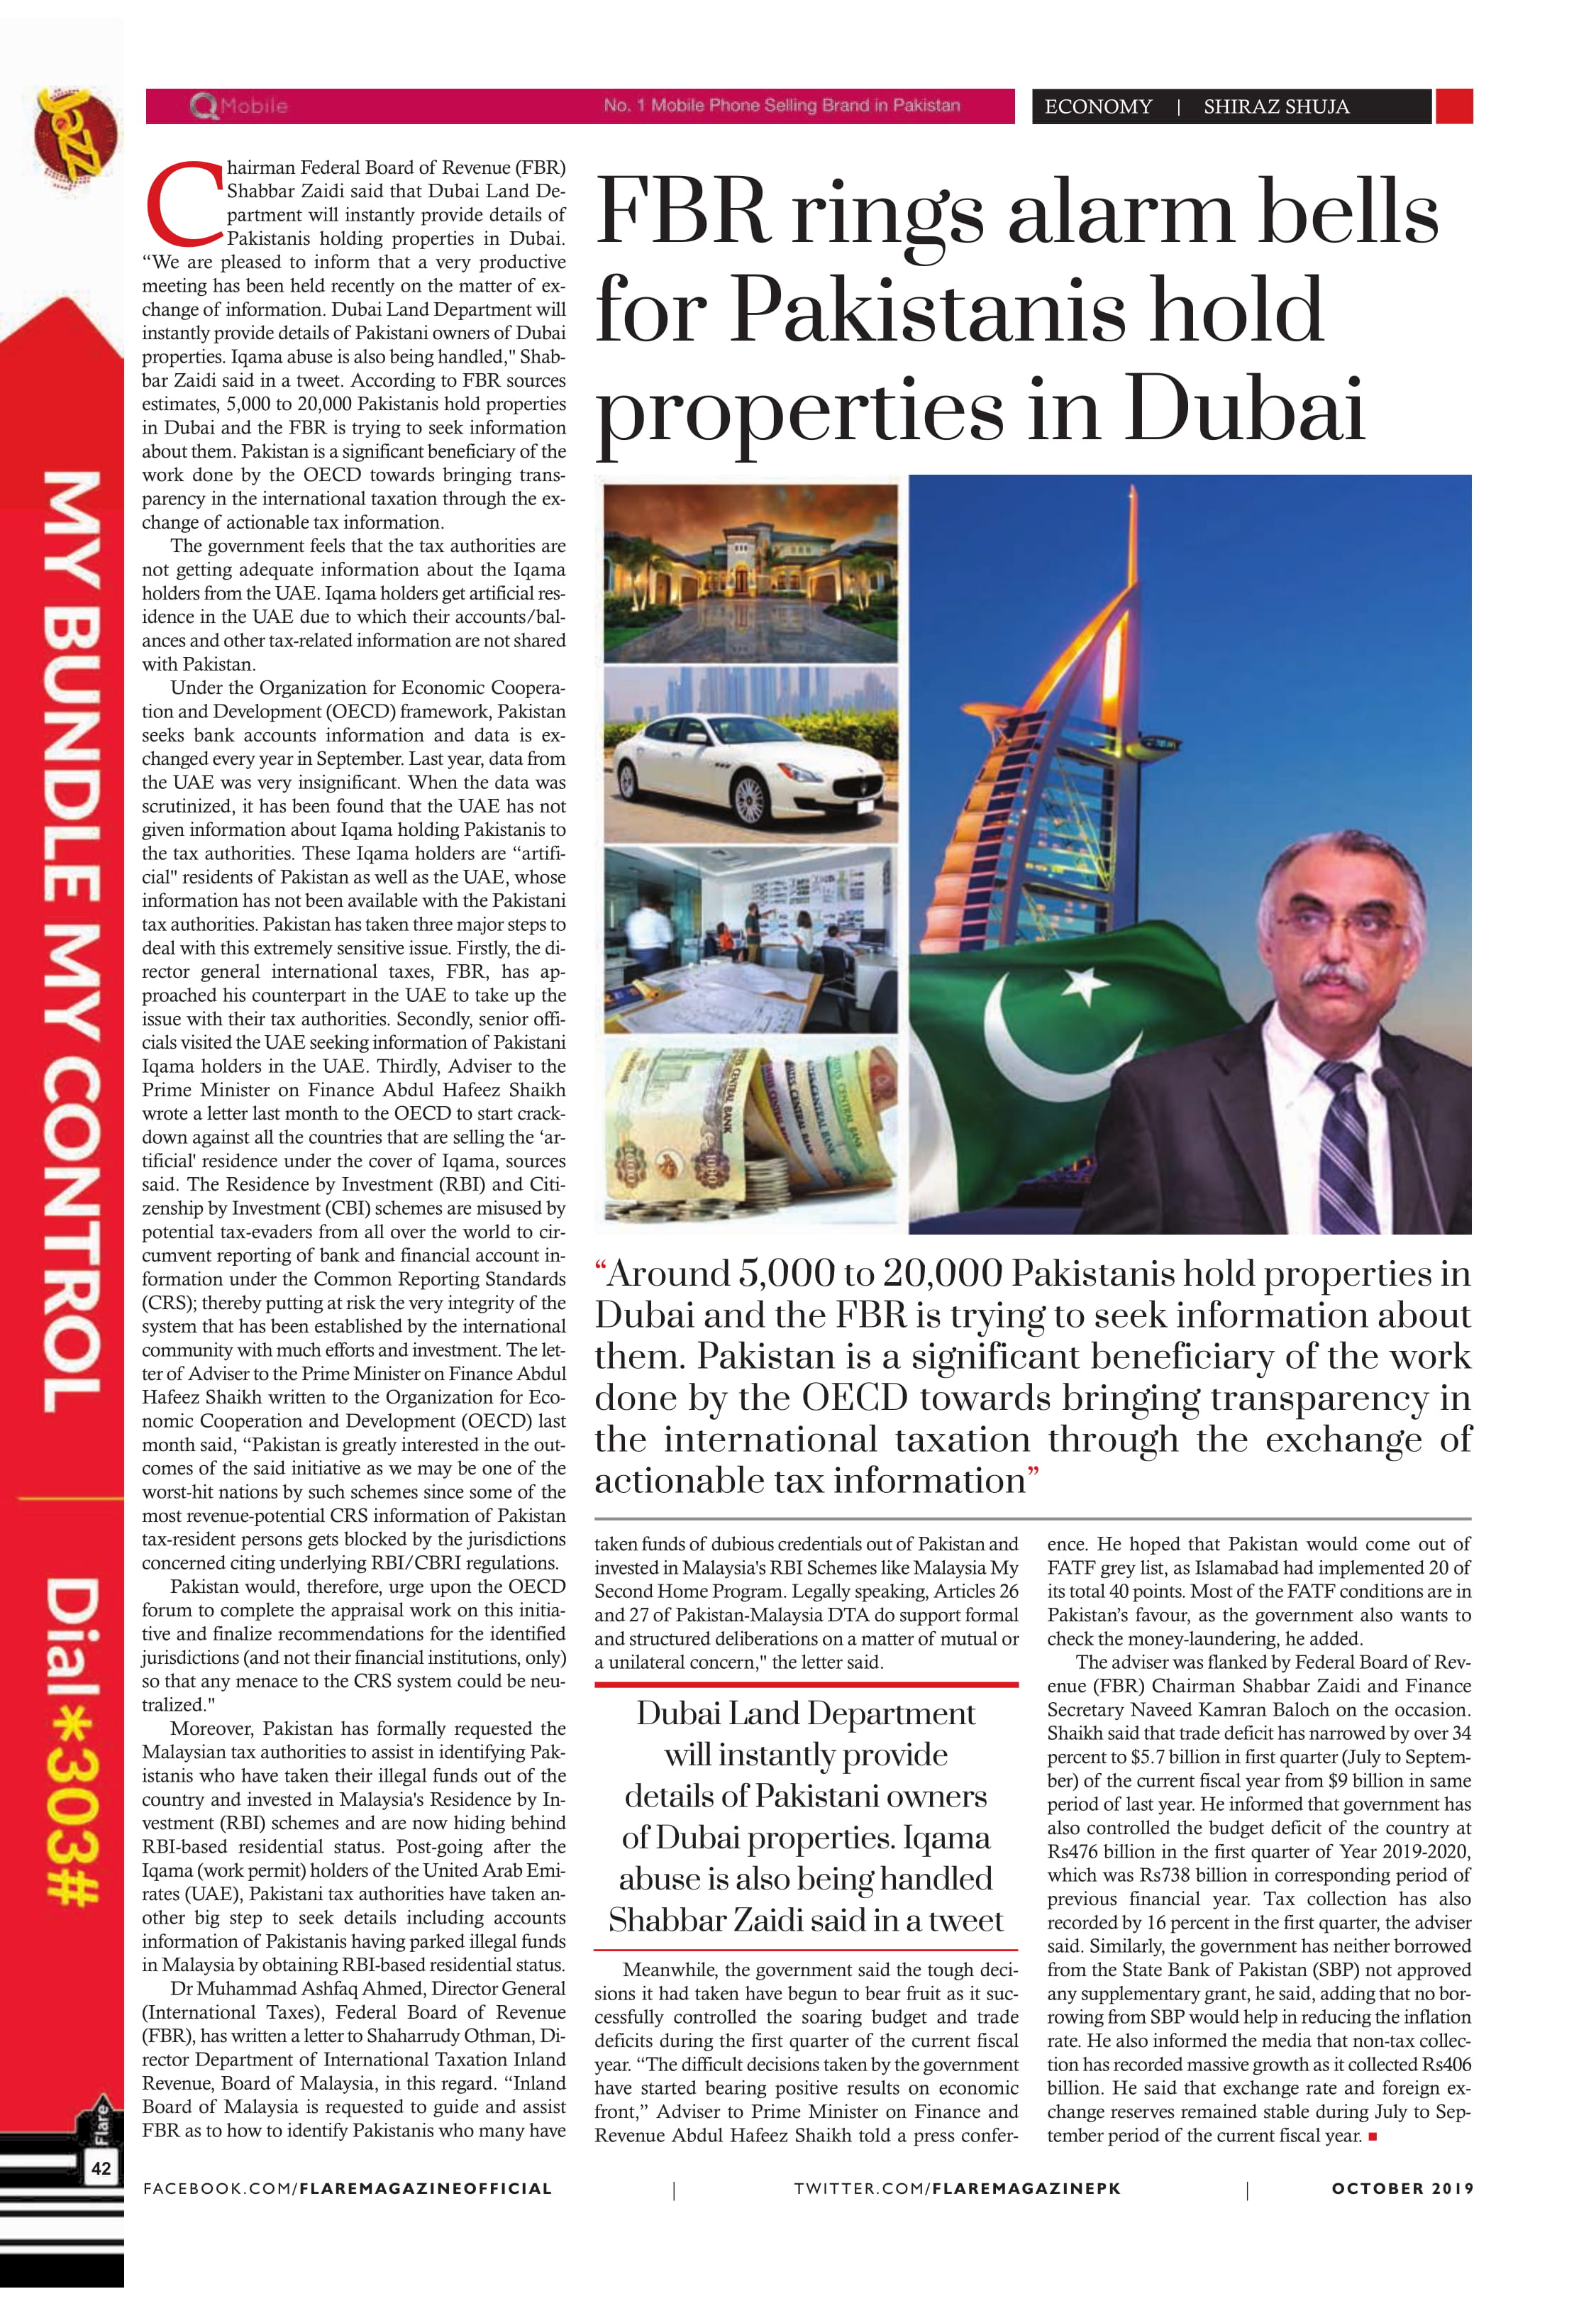 FBR rings alarm bells for Pakistanis hold properties in Dubai